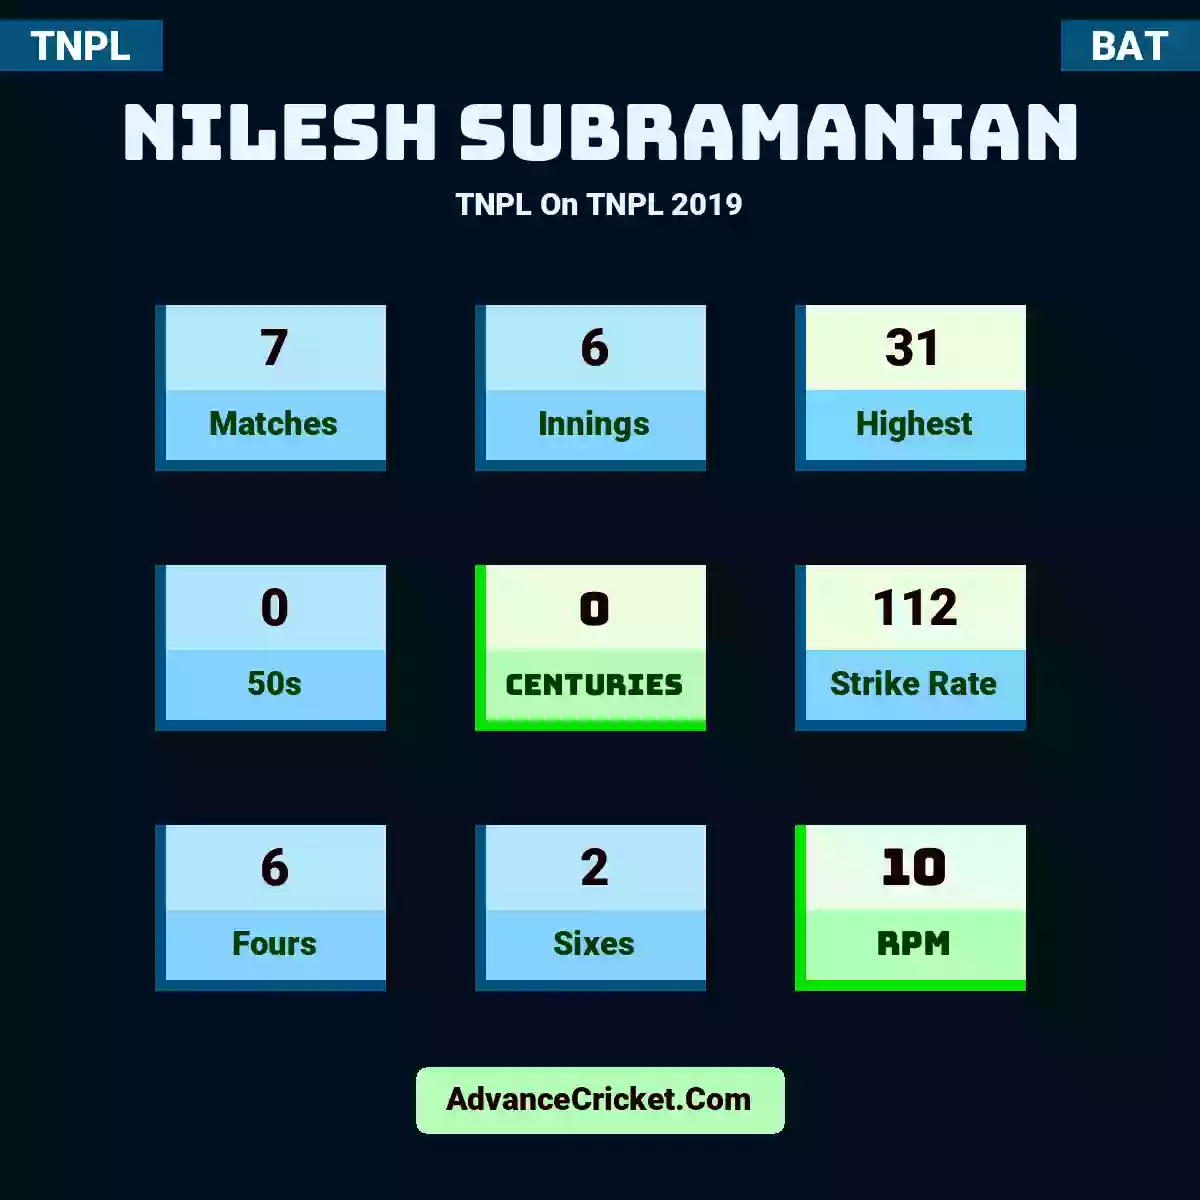 Nilesh Subramanian TNPL  On TNPL 2019, Nilesh Subramanian played 7 matches, scored 31 runs as highest, 0 half-centuries, and 0 centuries, with a strike rate of 112. N.Subramanian hit 6 fours and 2 sixes, with an RPM of 10.